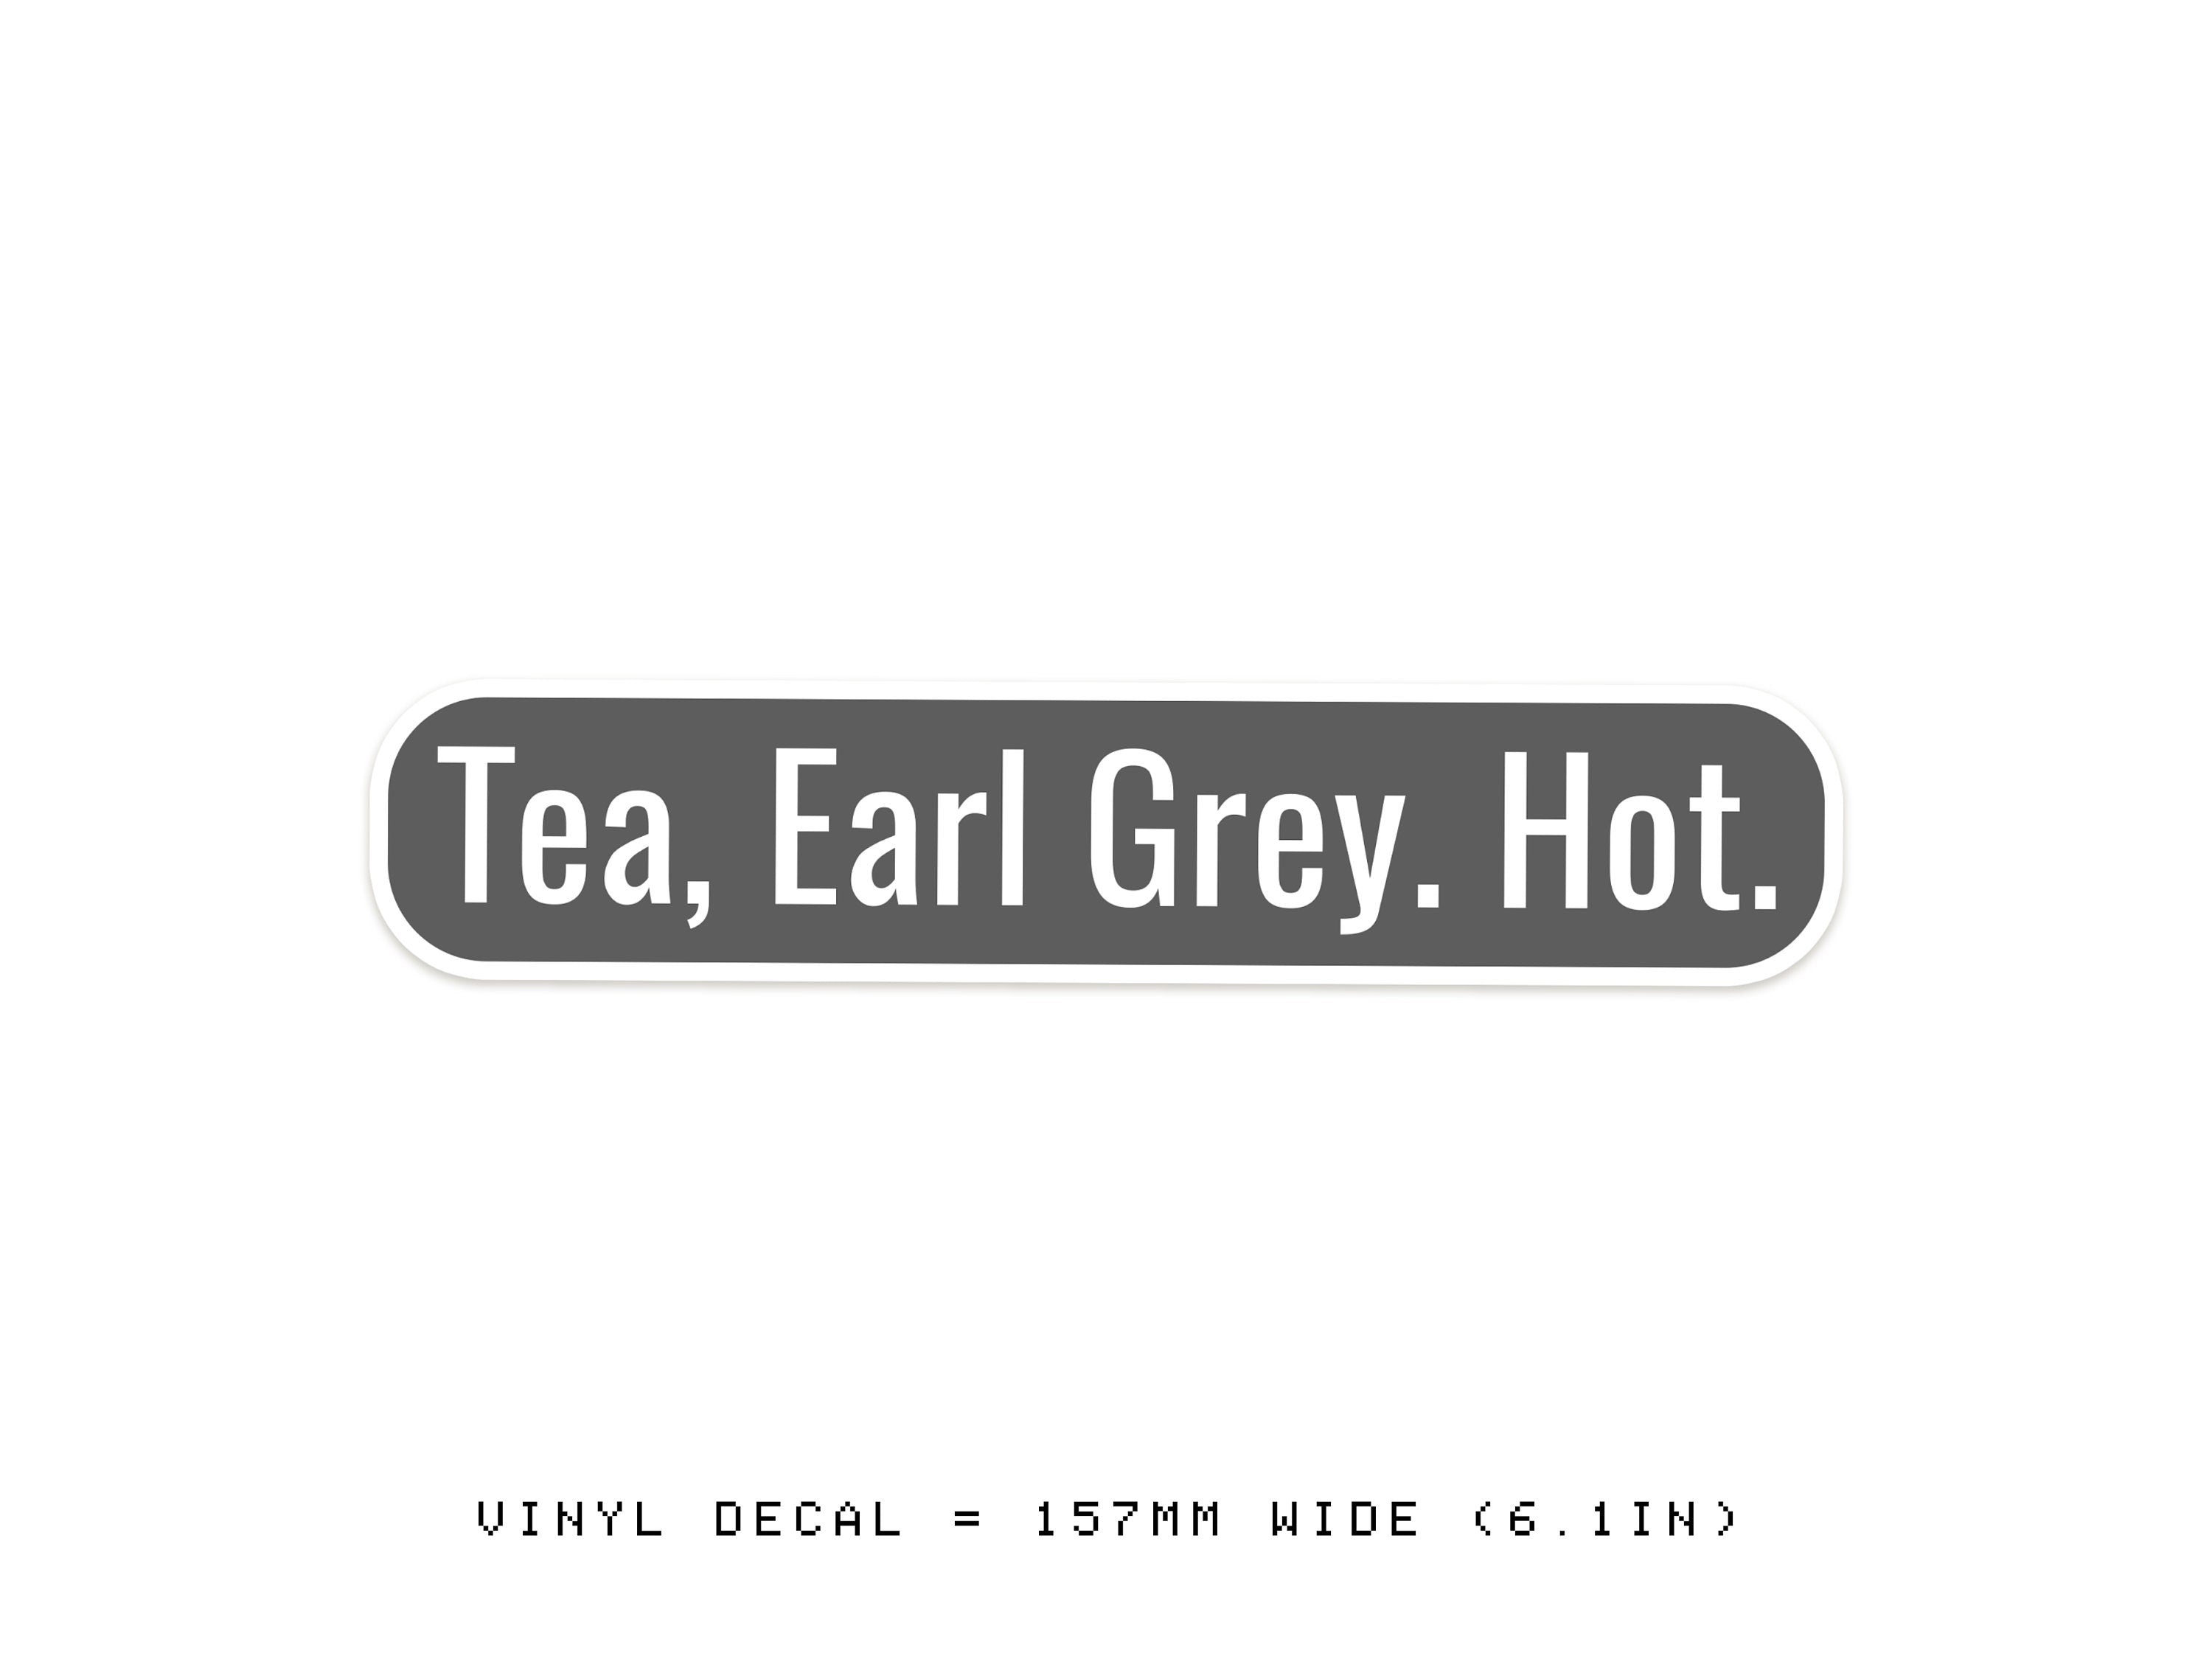 Picard's Earl Grey Vinyl Decal - Sci-Fi Trekkie Sticker - Captain Picard Decal